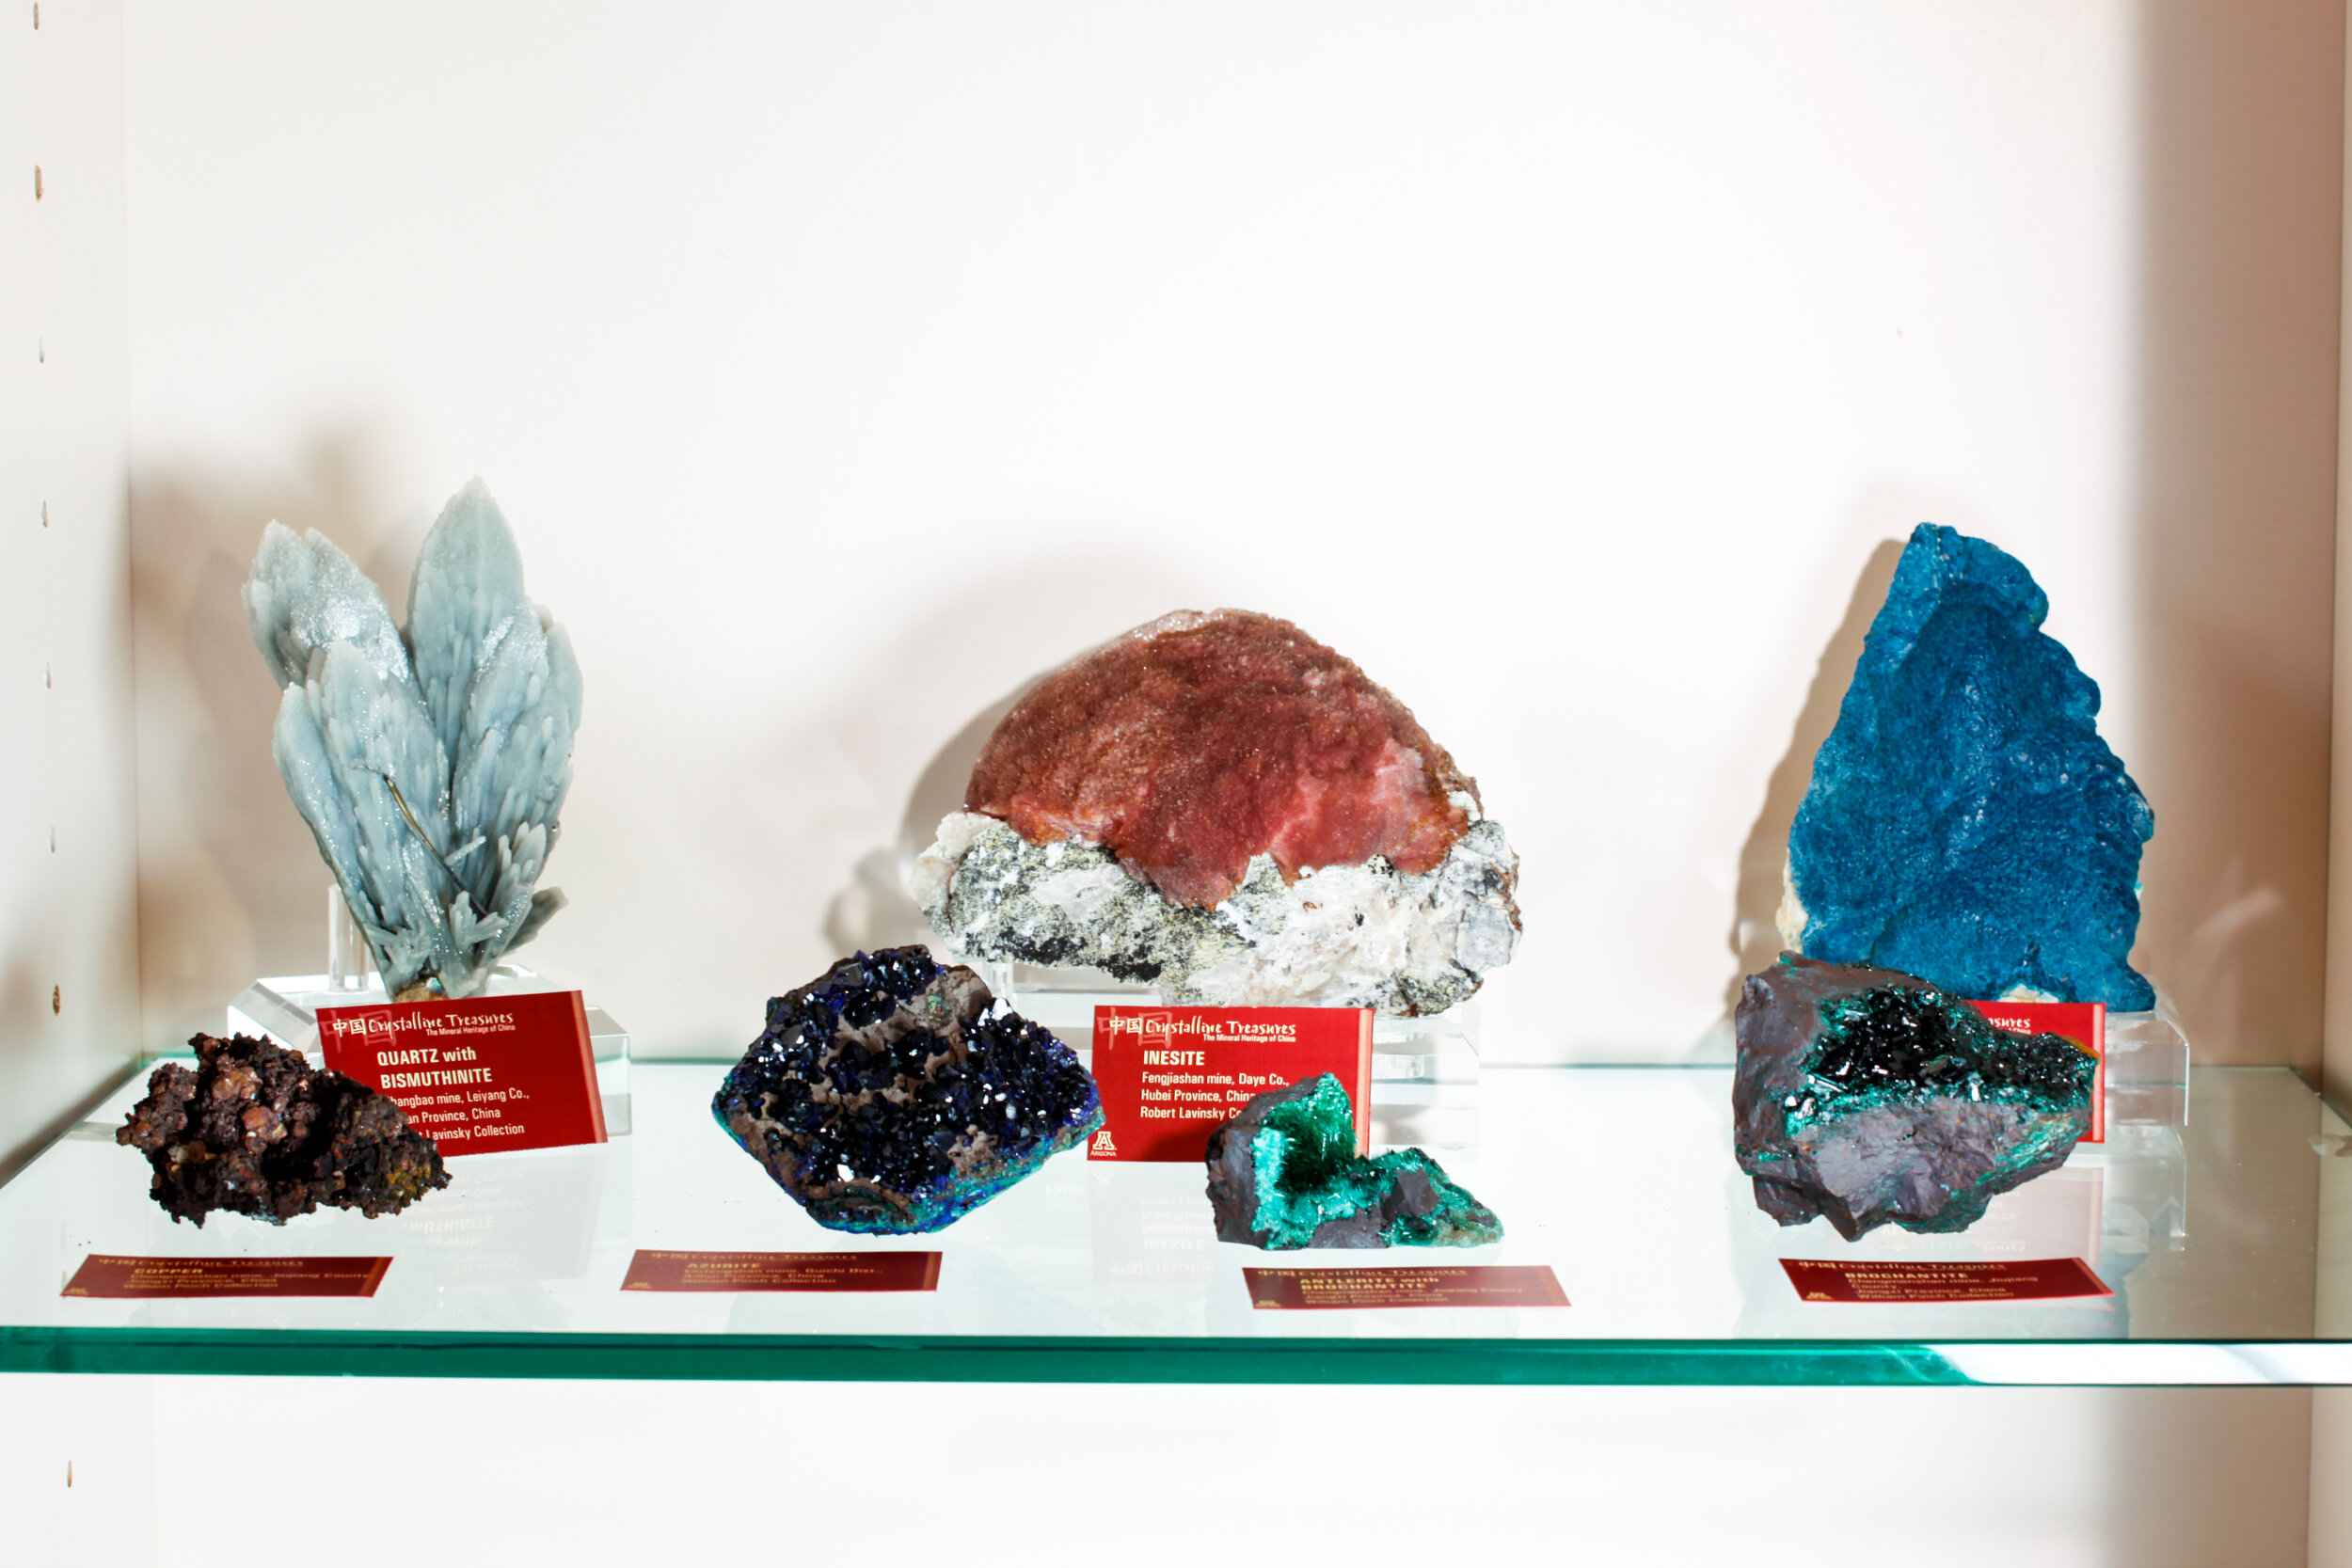 Crystalline Treasures: The Heritage of China, Flandrau Exhibition